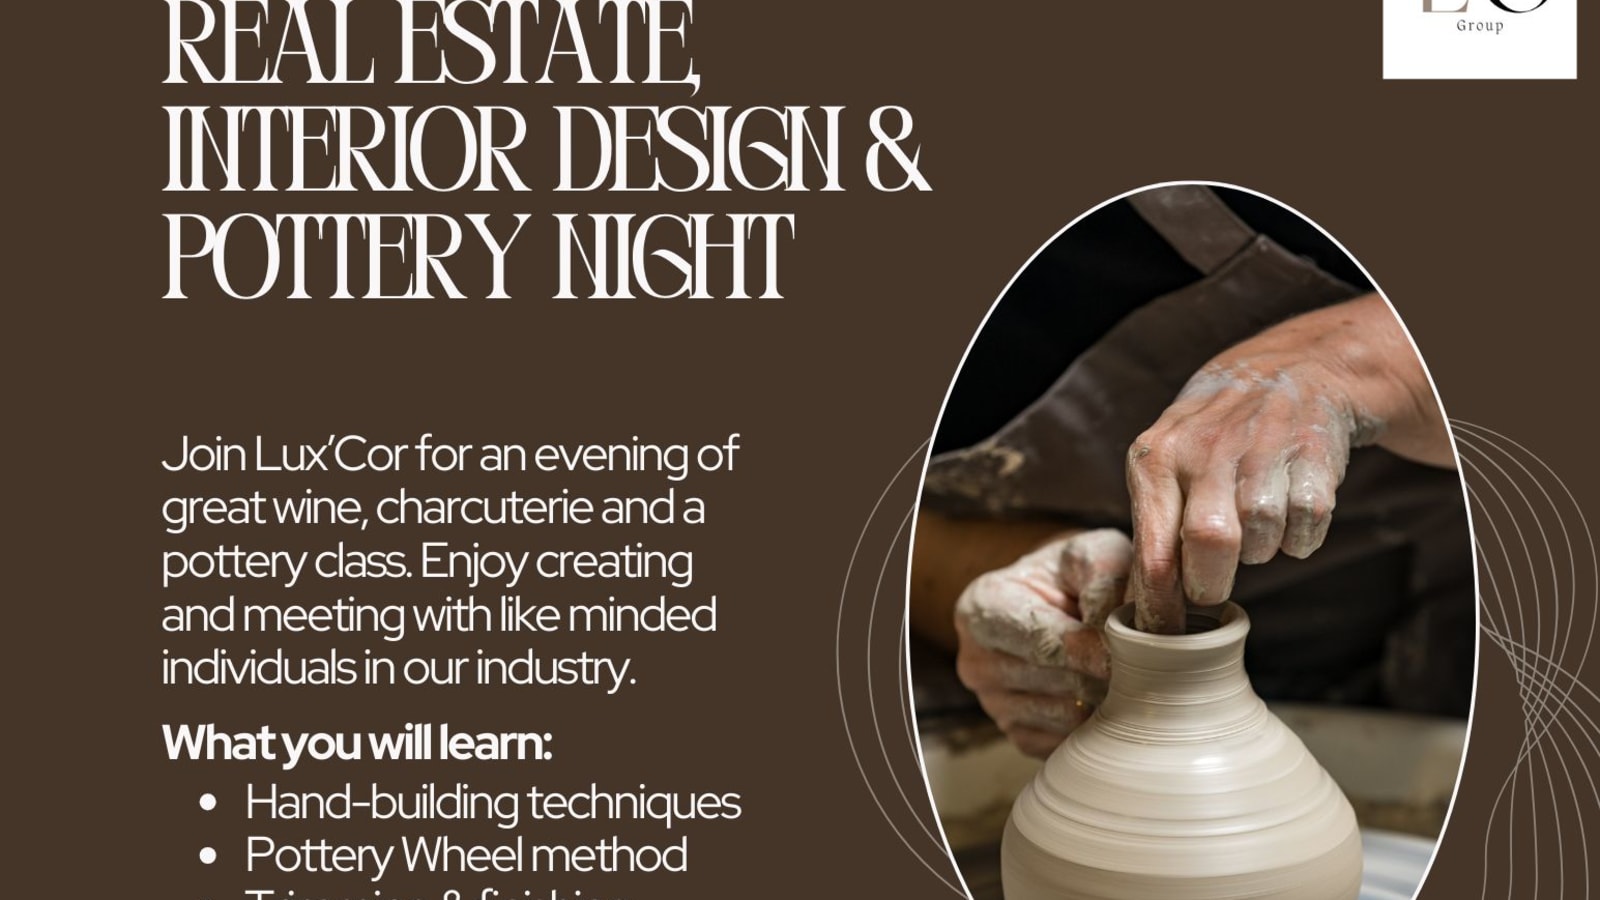 Real Estate & Interior Design Pottery Night